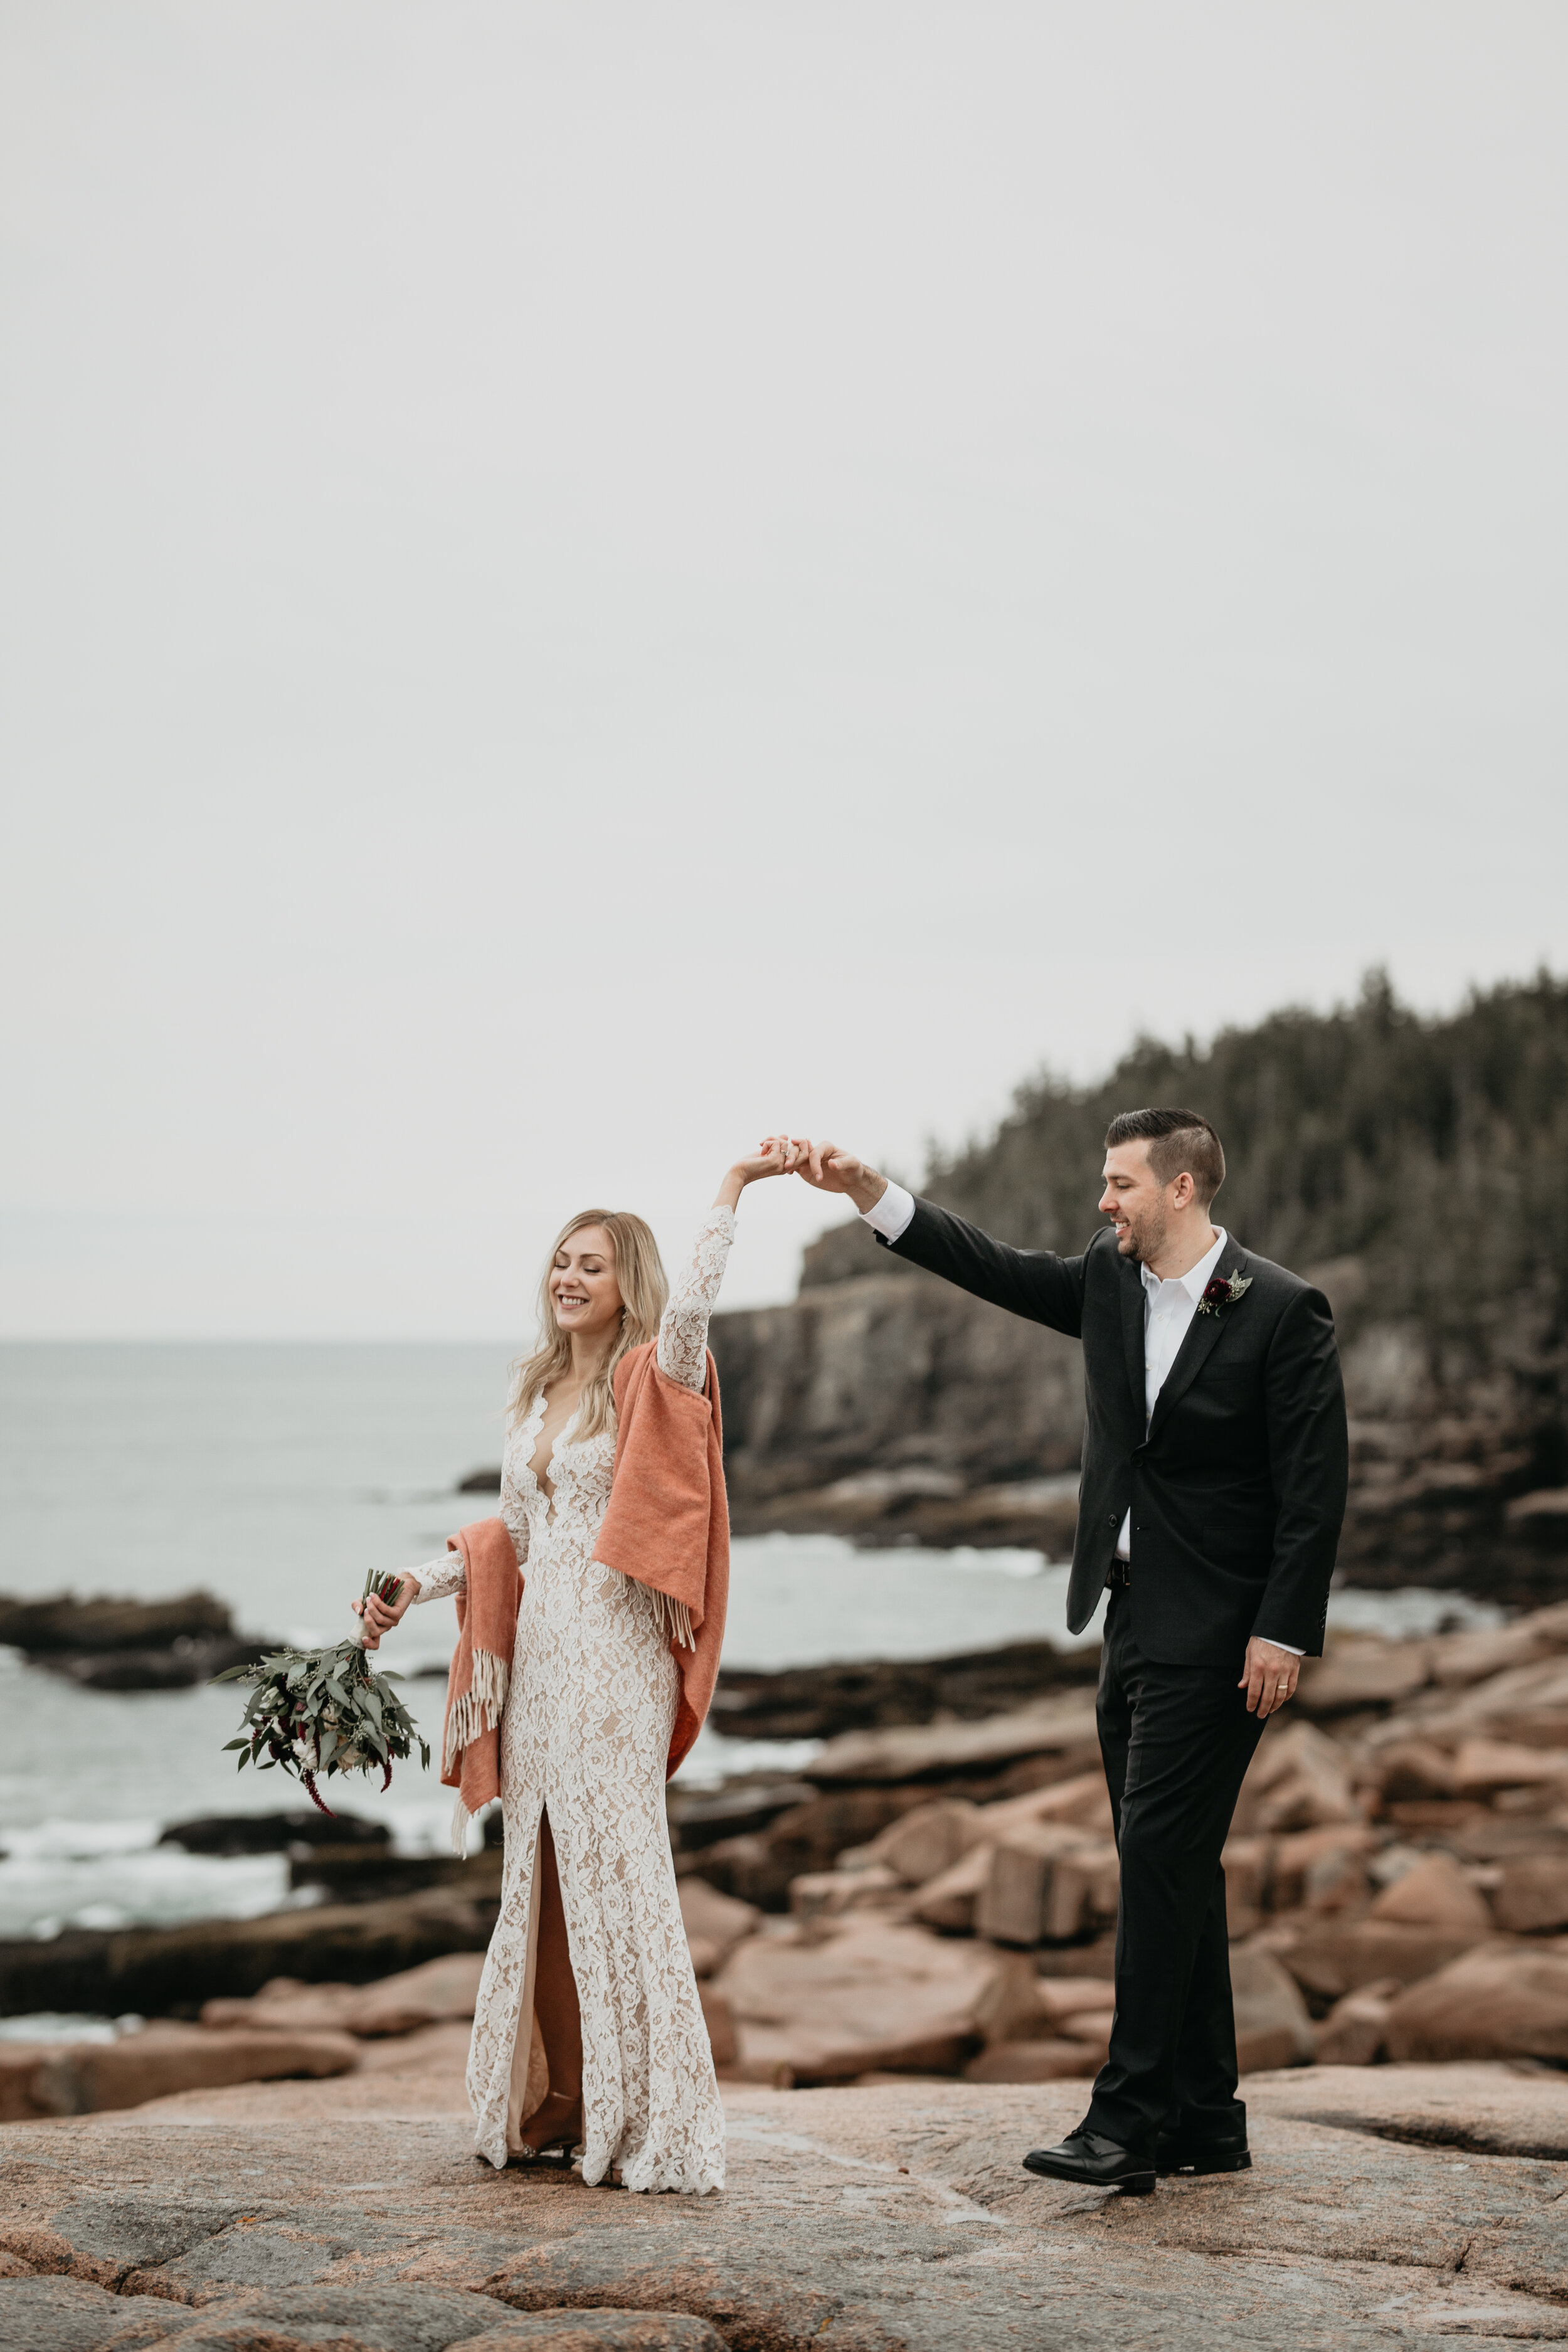 Nicole-Daacke-Photography-Acadia-national-park-elopement-photography-elopement-in-acadia-inspiration-maine-intimate-wedding-destination-elopement-photographer-rainy-day-maine-coast-bar-harbor-elopement-photography-154.jpg